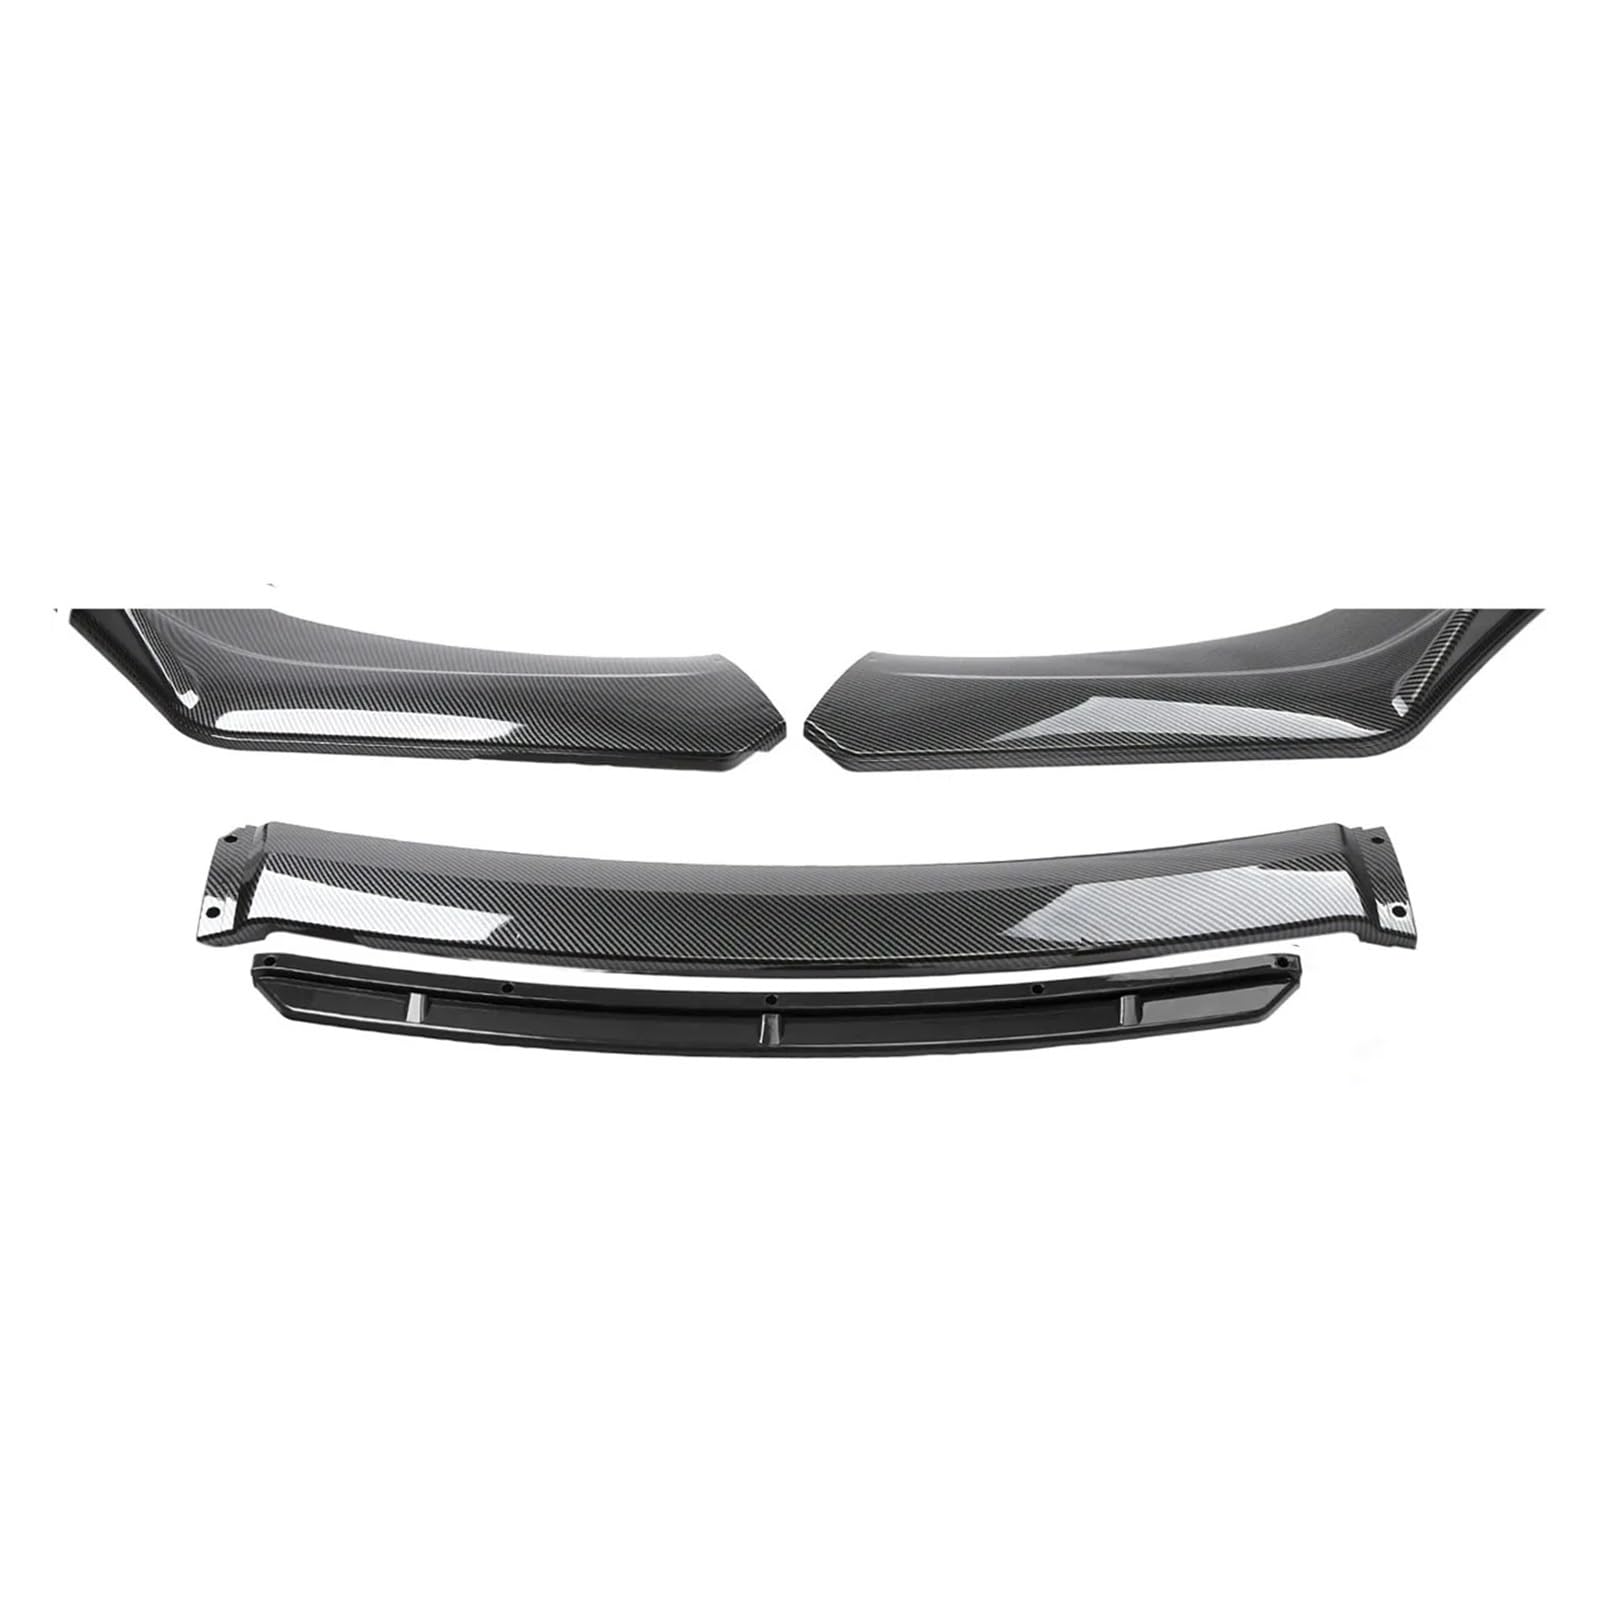 4PCS Compatible for Kia Optima K5 2014-2017 Front Bumper Lip Spoiler Splitter Diffuser Body Kit Guards Universal Fit Car Accessories(Carbon Look) von yuxinlugr